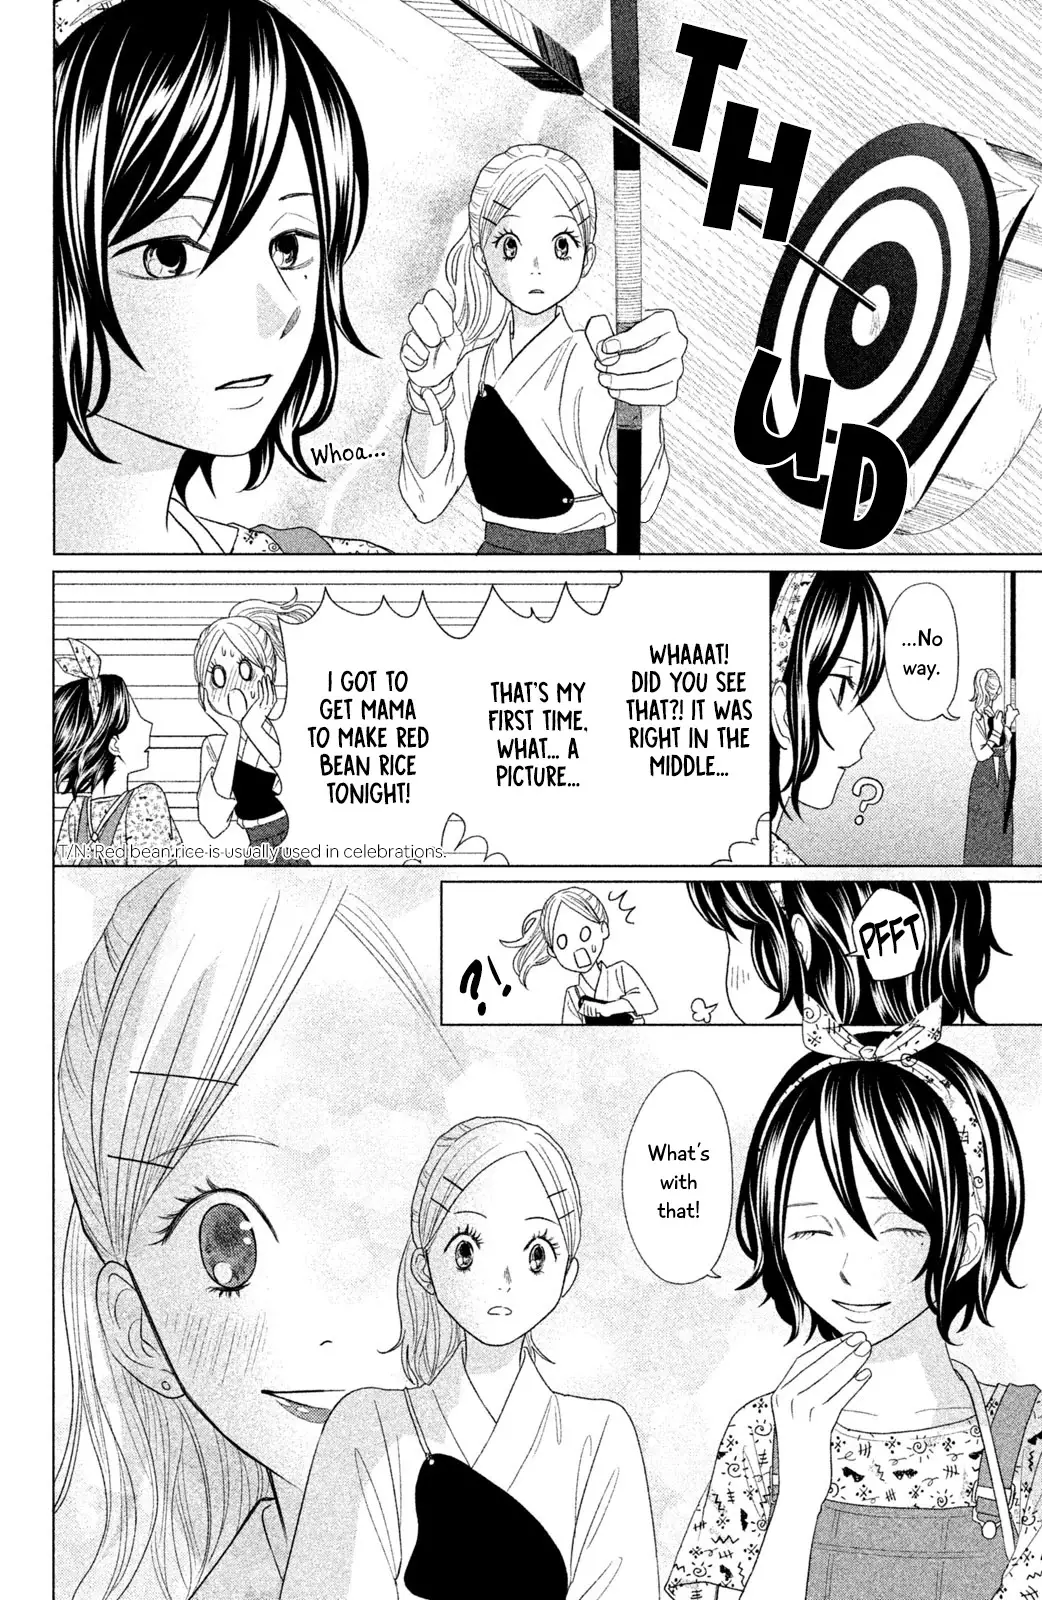 Chihayafuru: Middle School Arc - 12 page 25